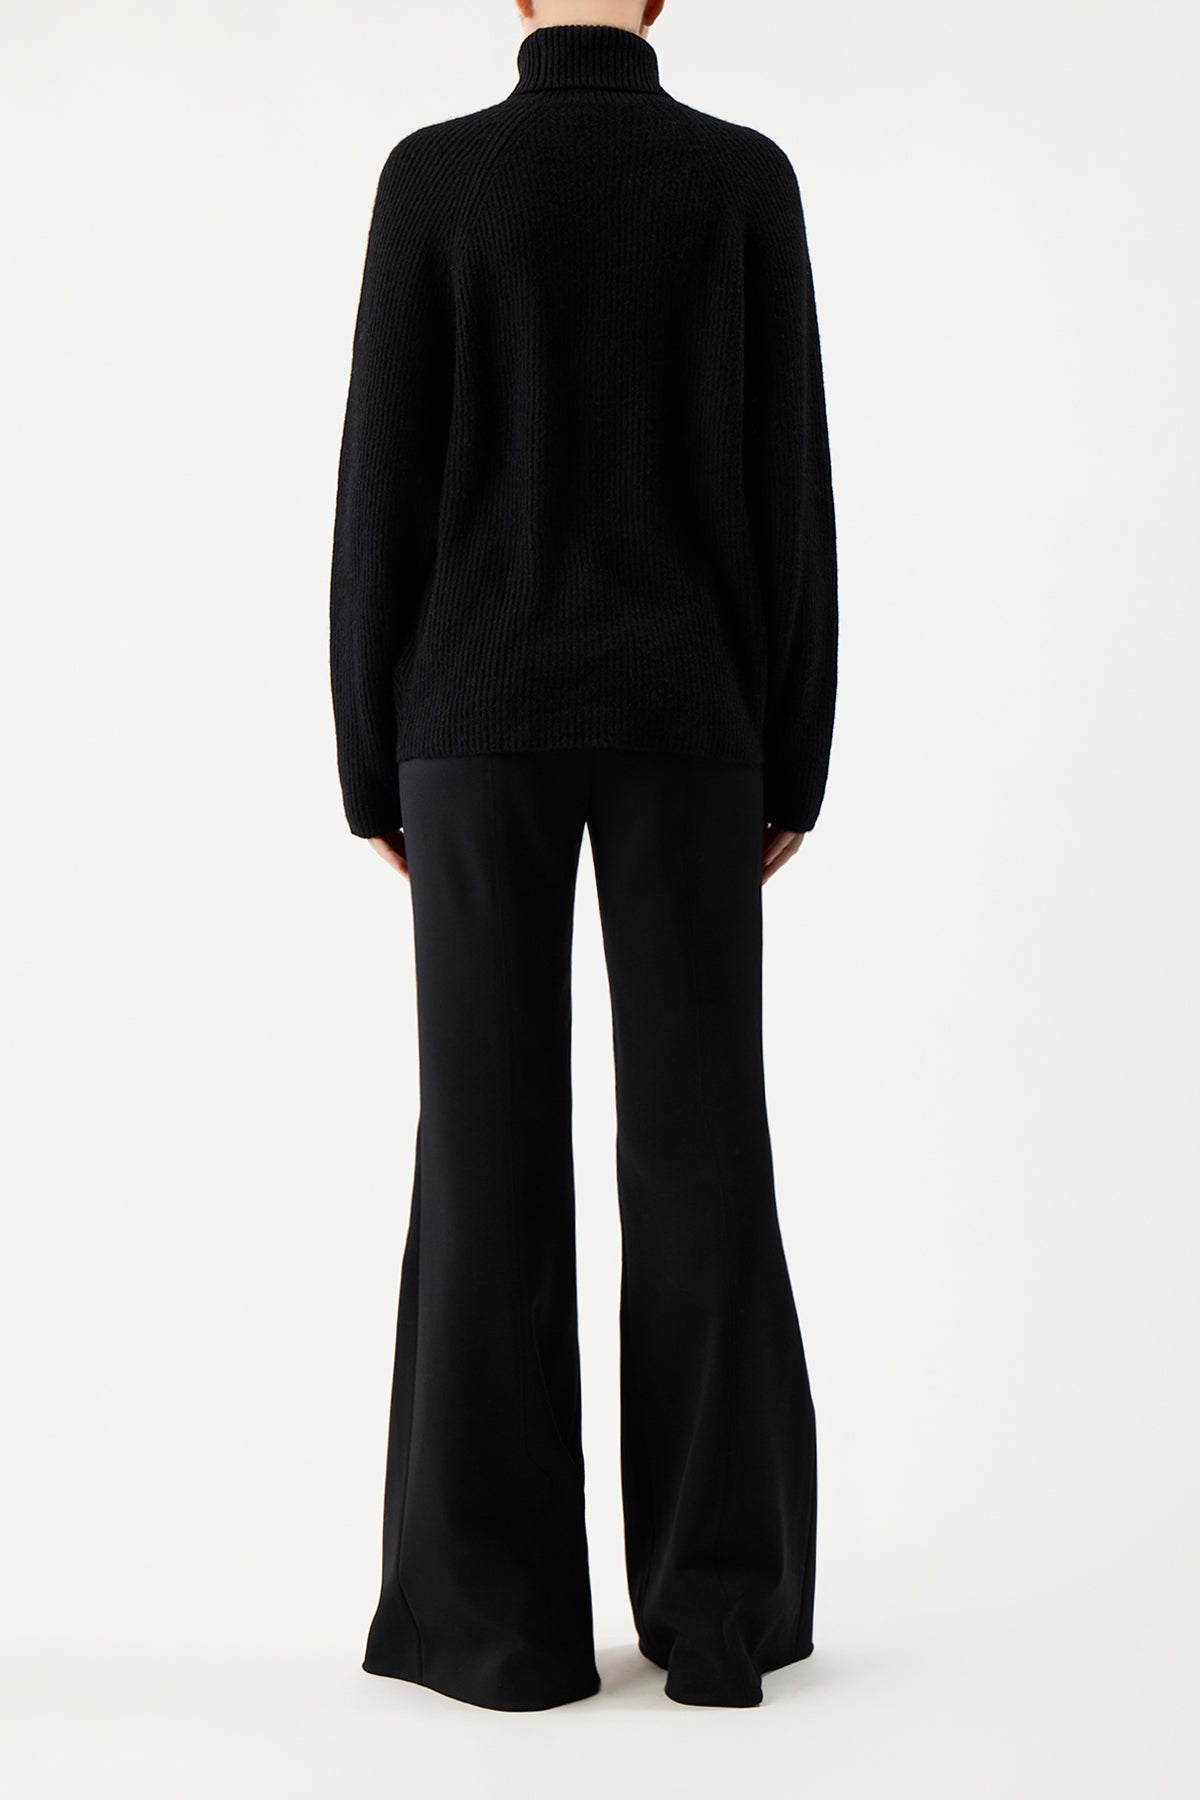 Wigman Knit Turtleneck Sweater in Black Cashmere